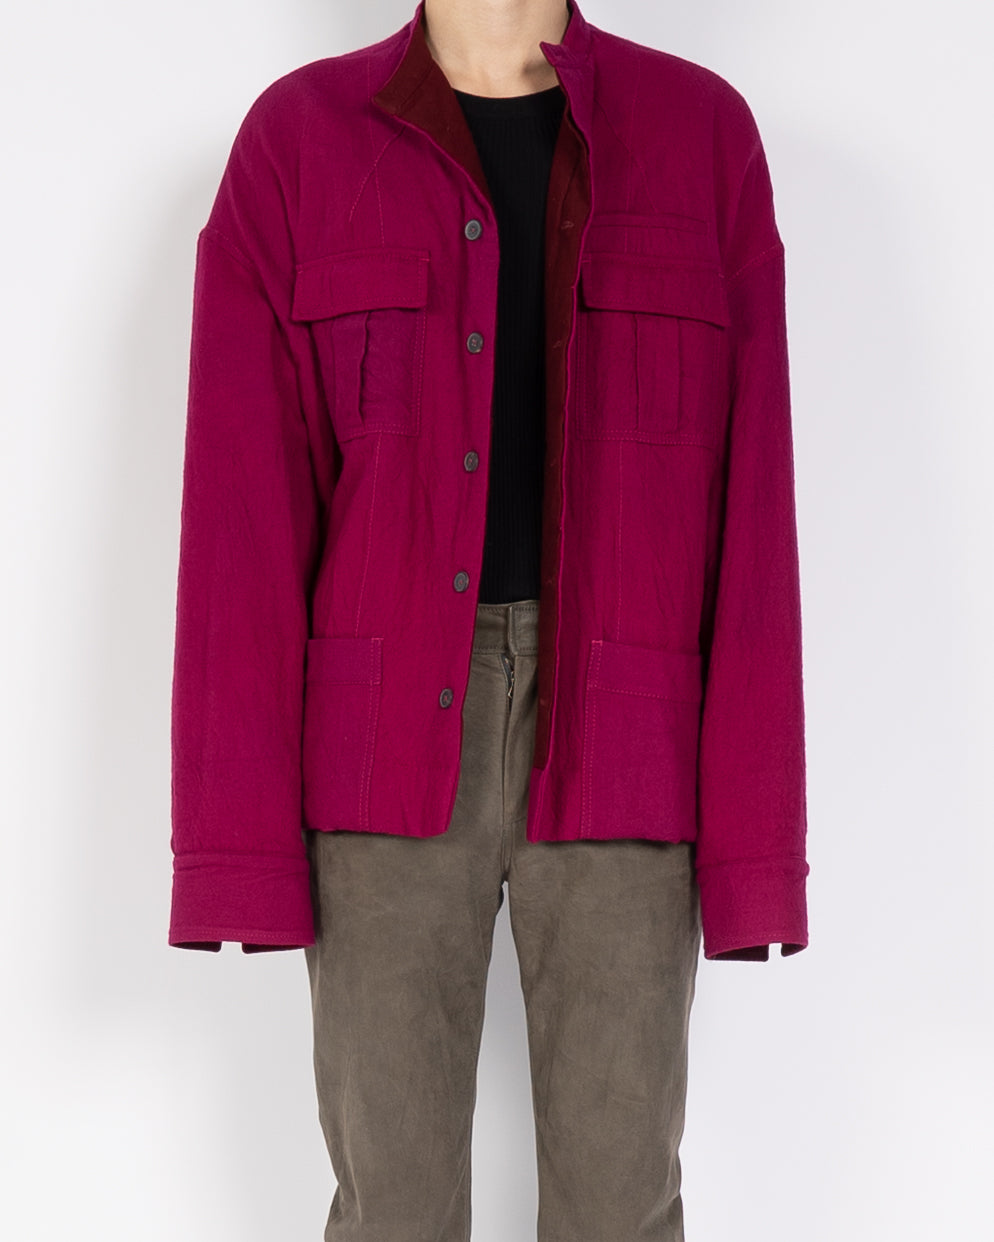 FW17 Pink Oversized Wool Overshirt 1 of 1 Sample